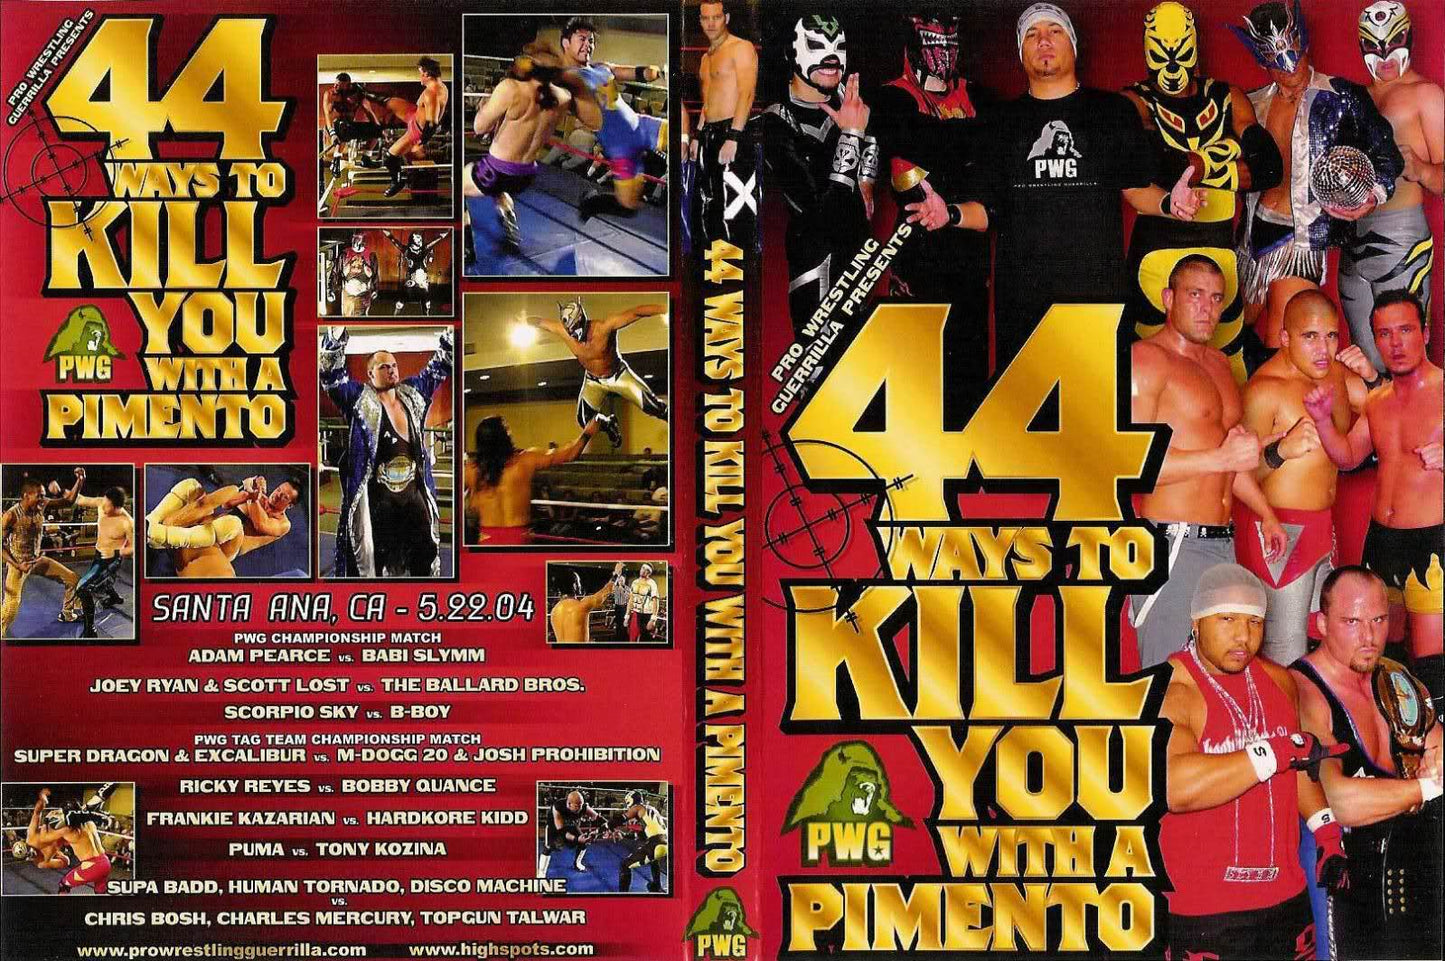 44 ways to kill you with a pimento